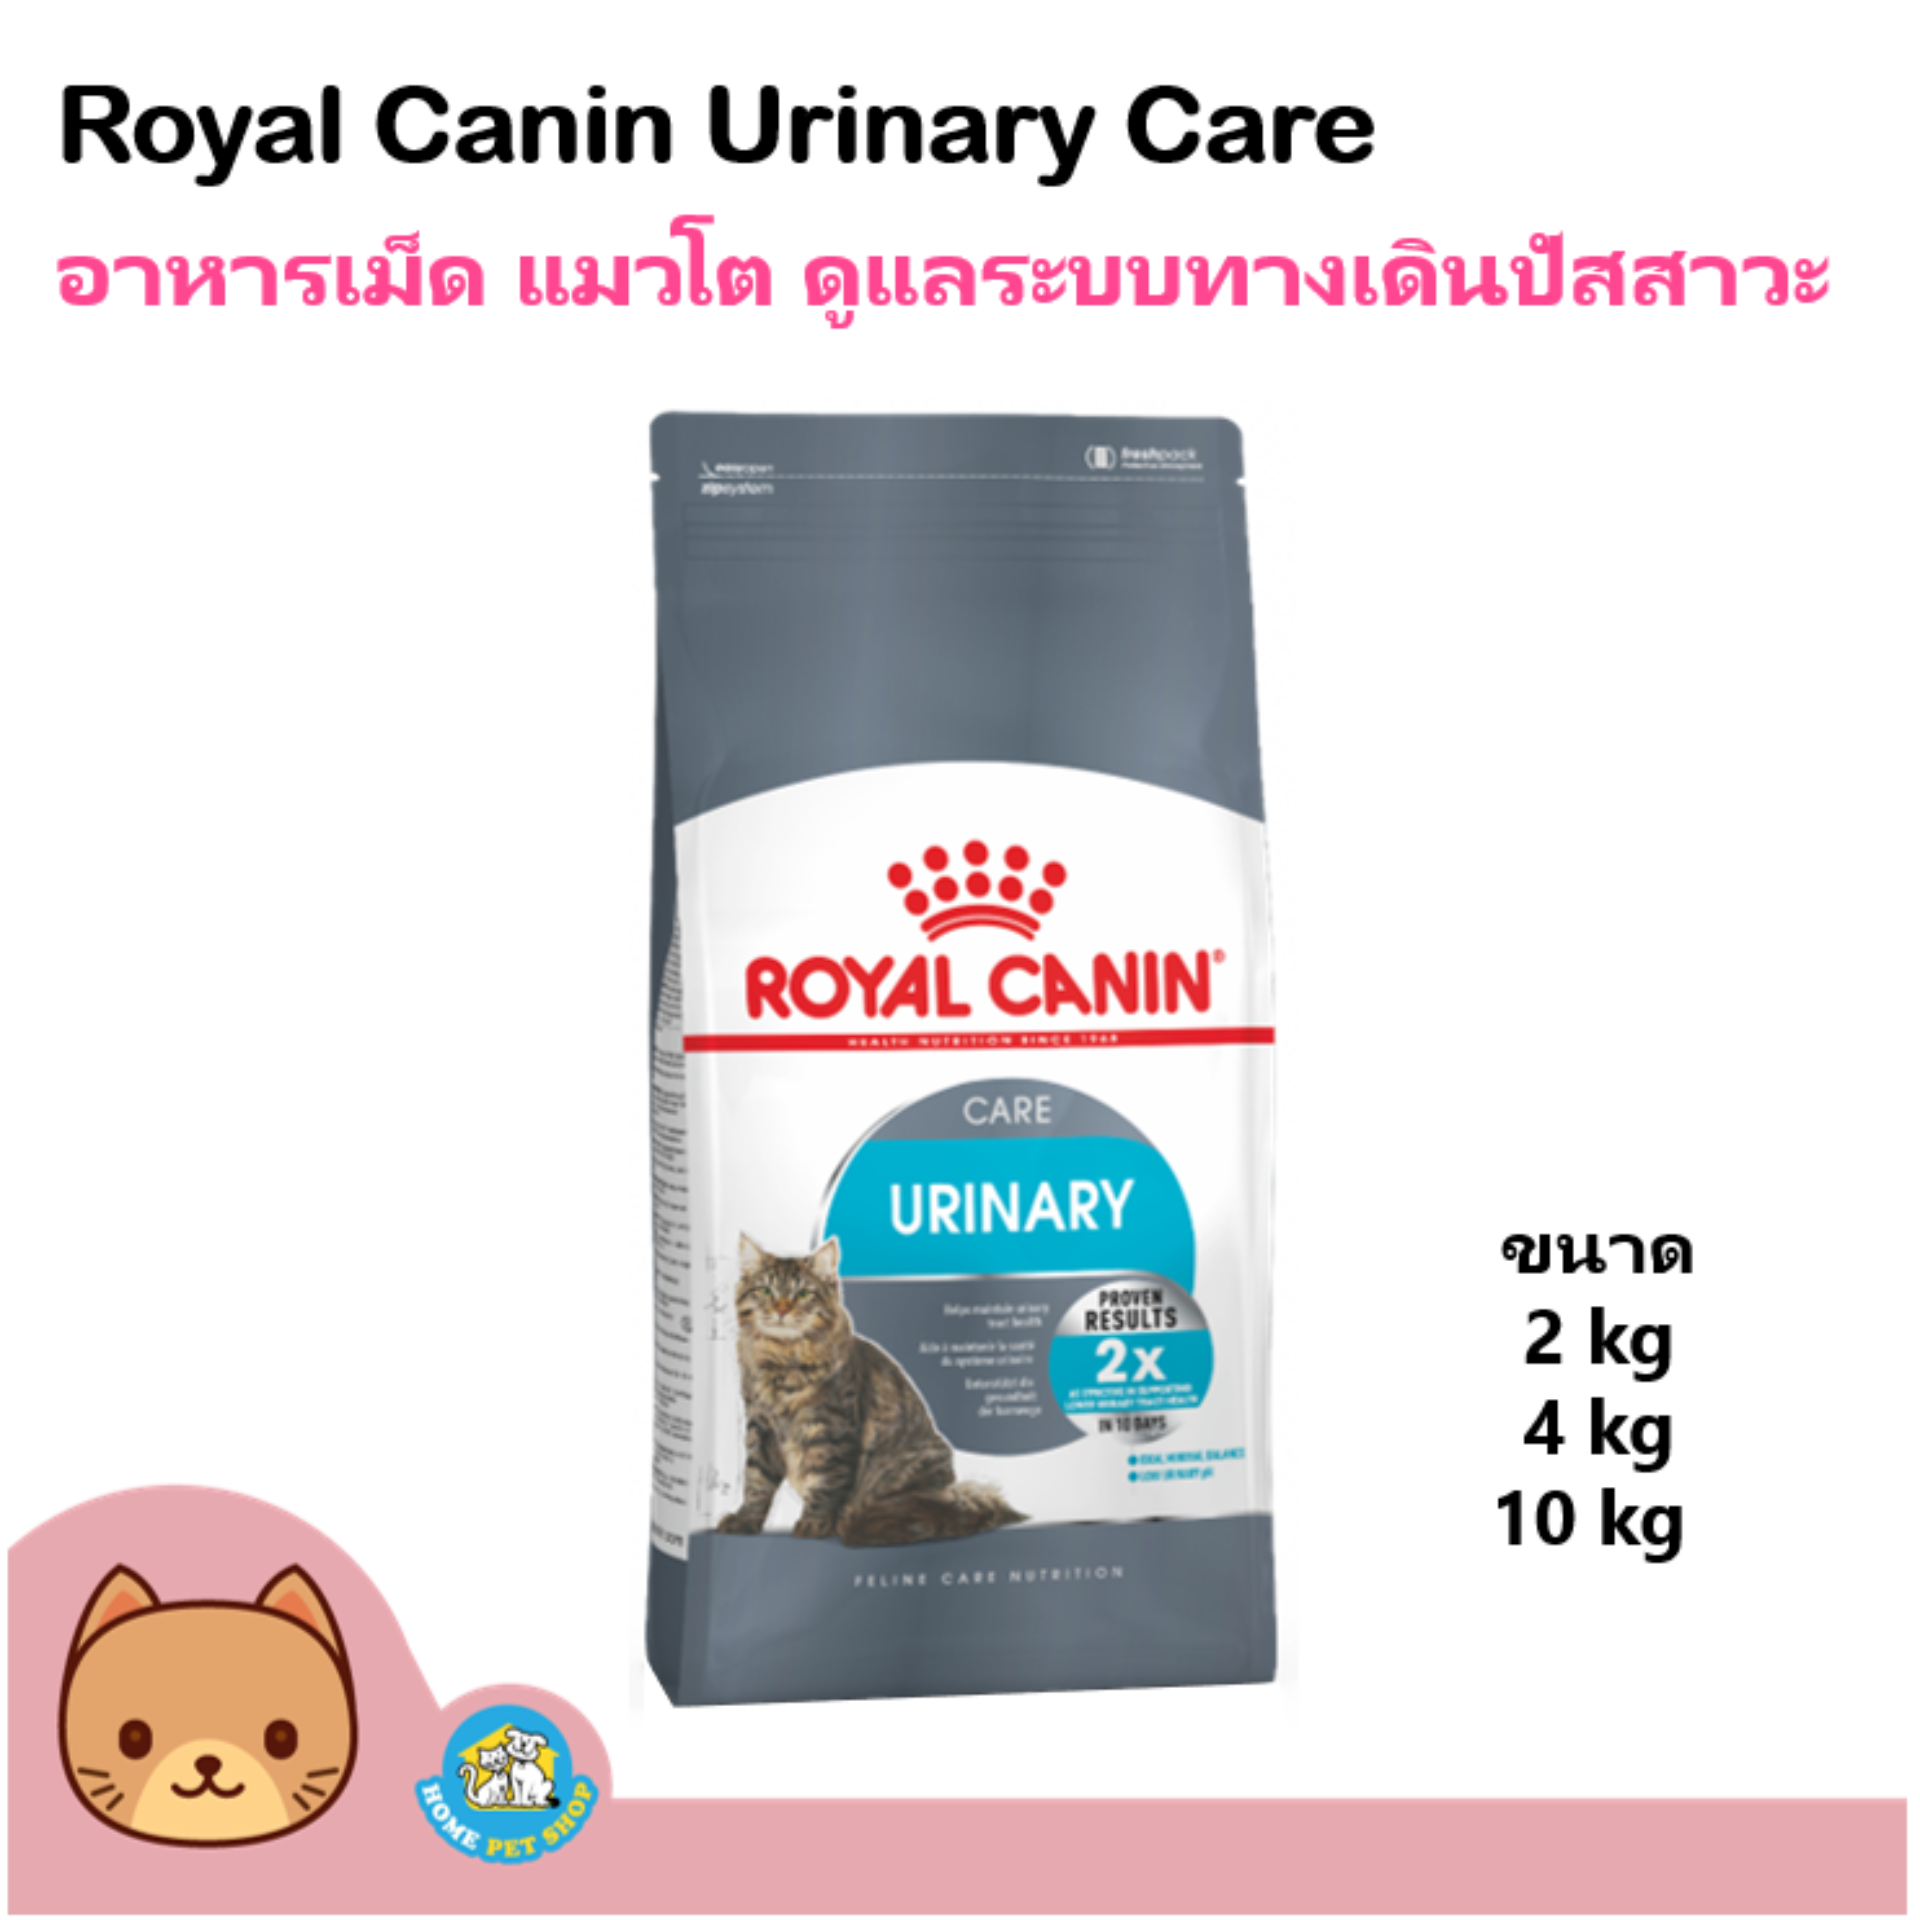 Royal Canin Urinary อาหารแมว สูตรดูแลสุขภาพทางเดินปัสสาวะส่วนล่าง